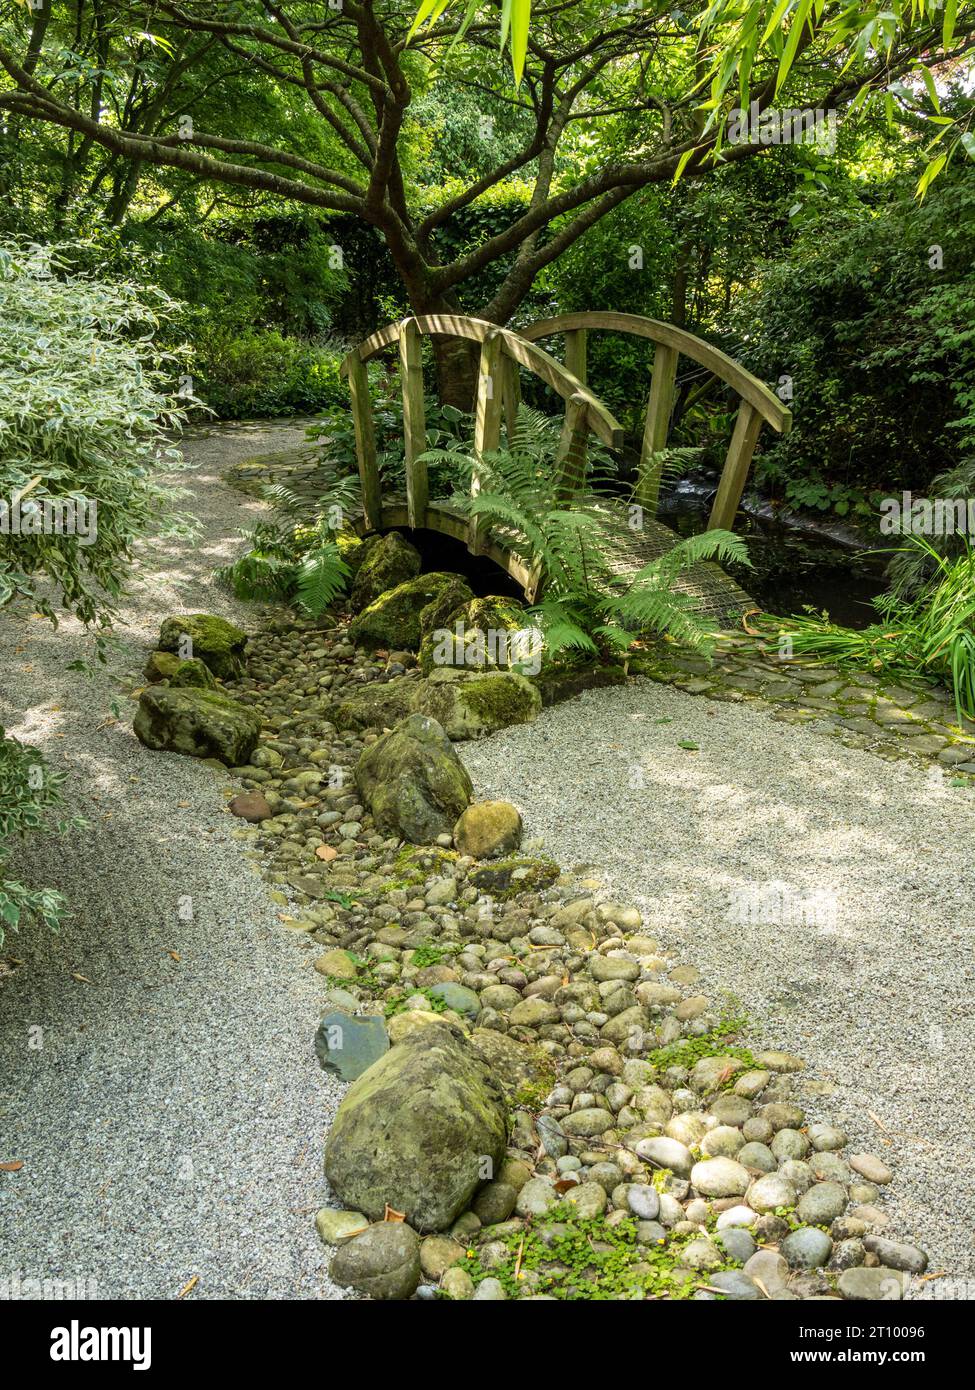 Japanese Zen styled garden with raked gravel, ornate wooden bridge and river of pebbles, Barnsdale Gardens, Rutland, England, UK. Stock Photo